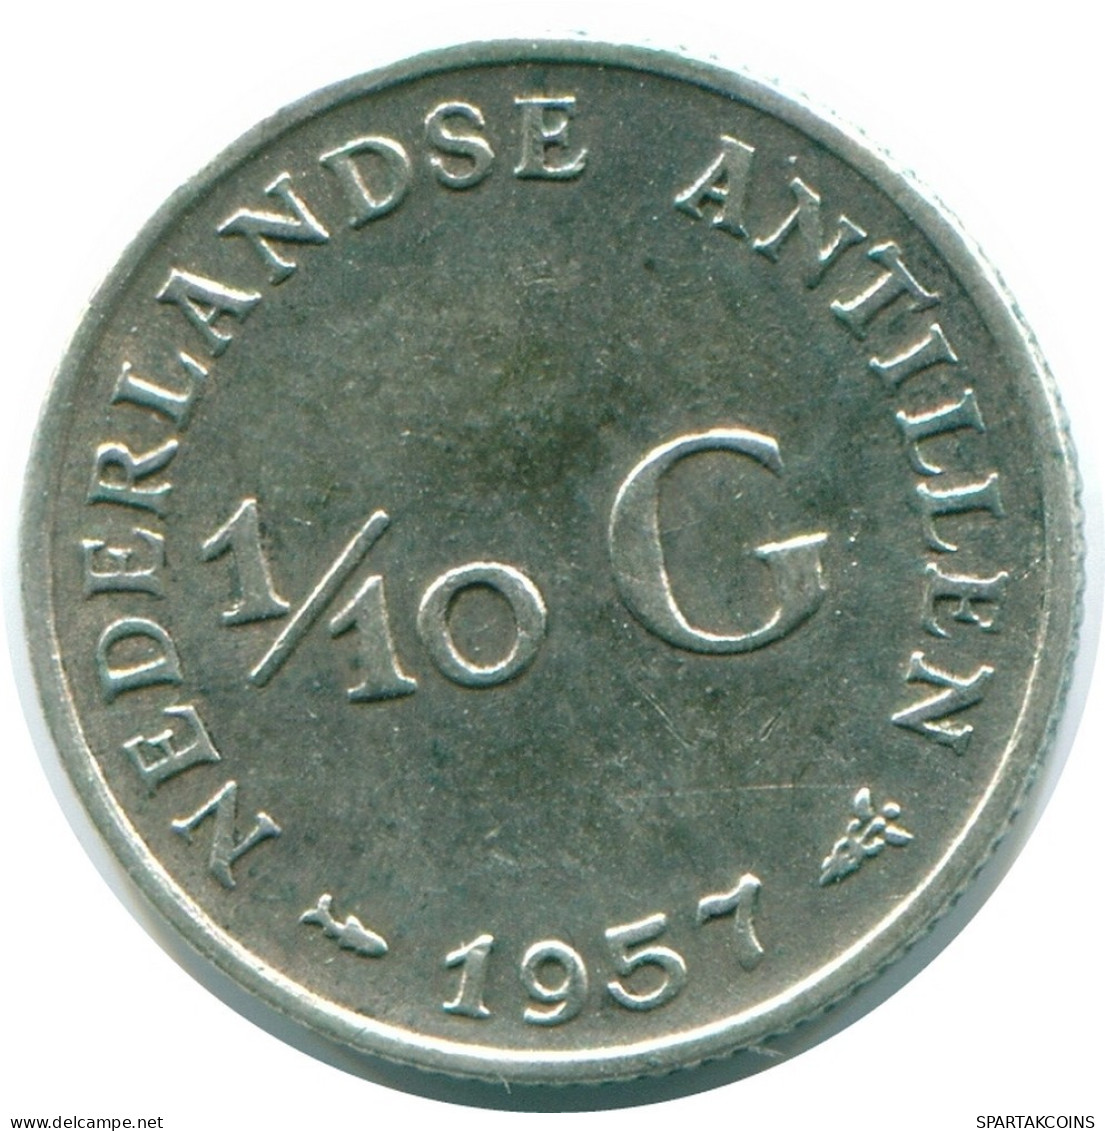 1/10 GULDEN 1957 NETHERLANDS ANTILLES SILVER Colonial Coin #NL12155.3.U.A - Antilles Néerlandaises